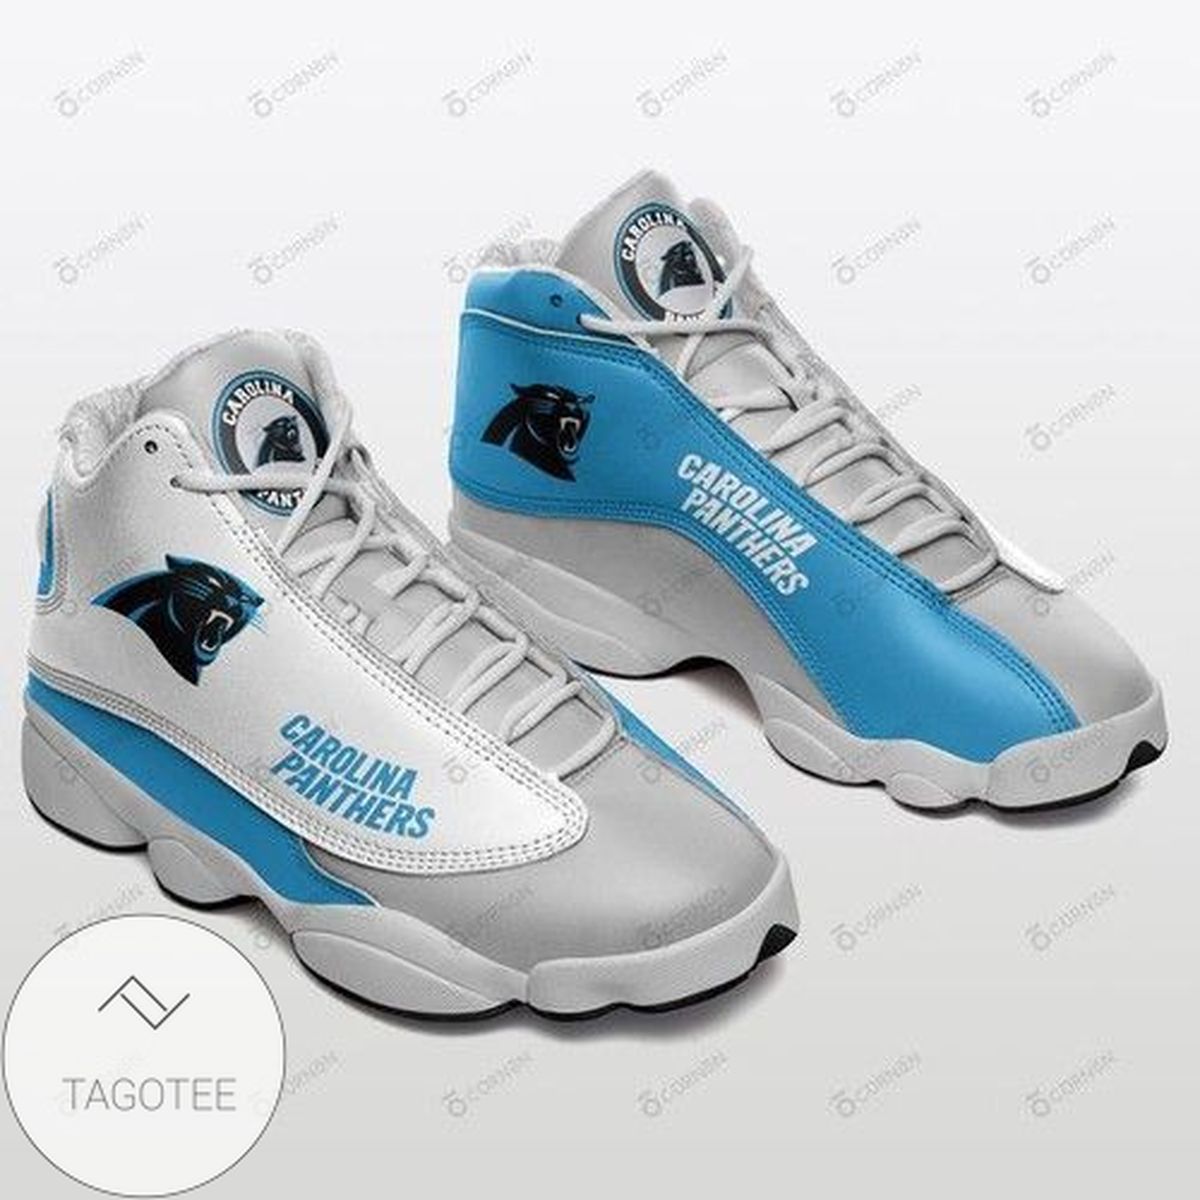 Carolina Panthers Air Jordan 13 Personalized Shoes Sport Sneakers For Fan